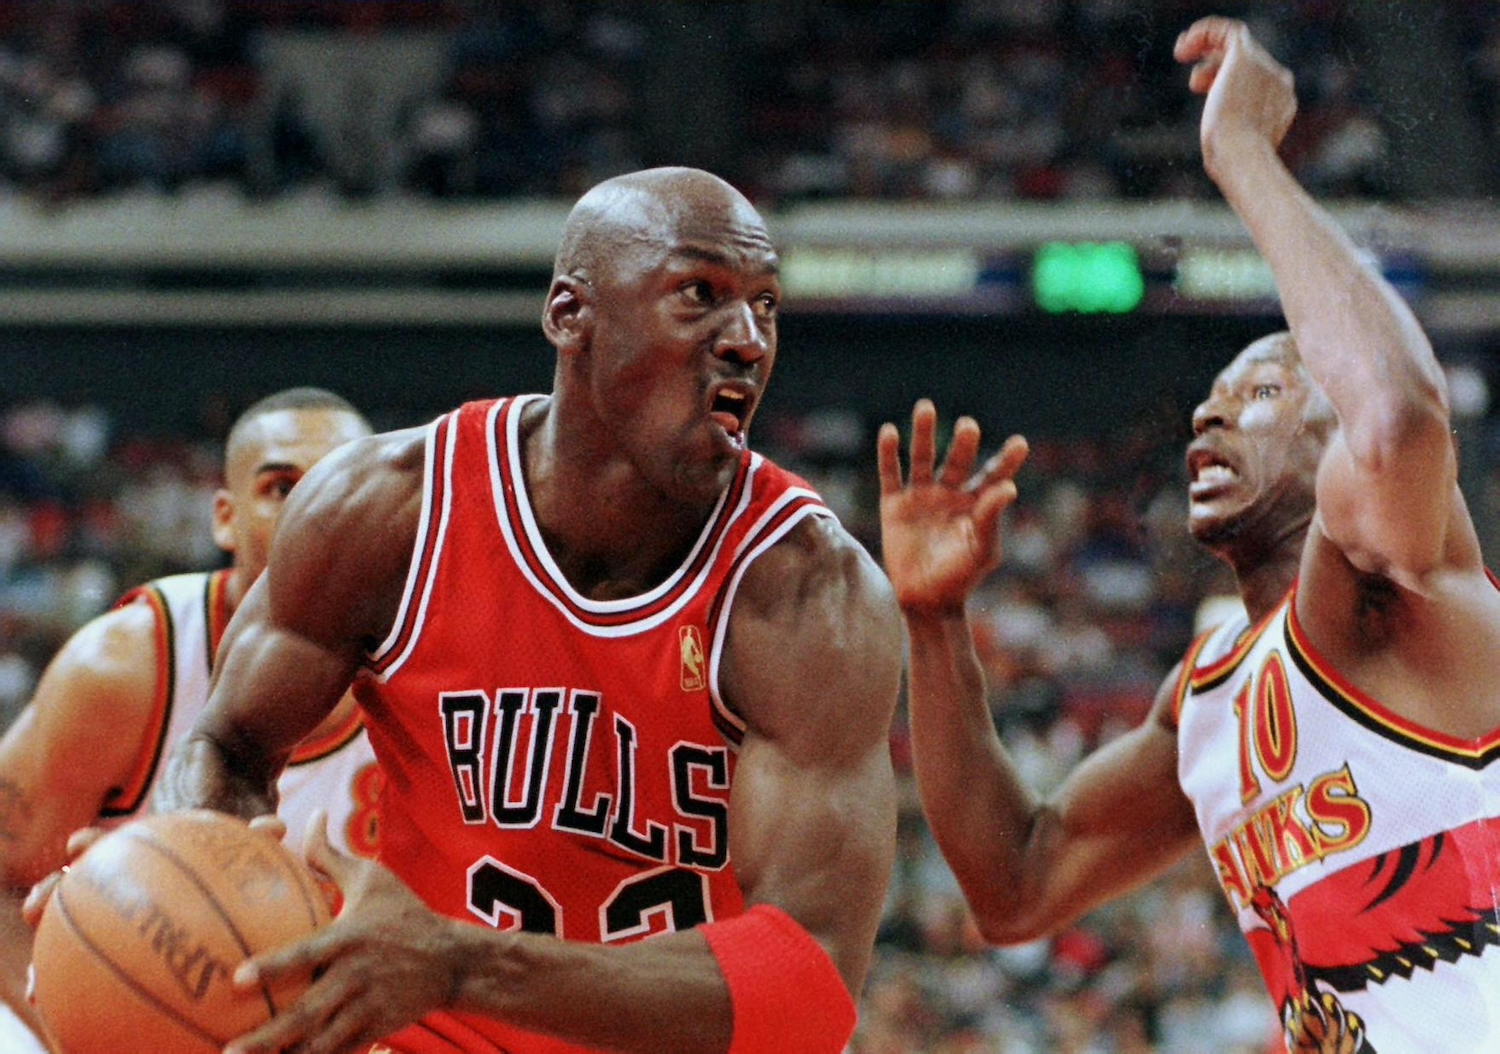 Michael Jordan drives to the rim during a 1997 Chicago Bulls game.